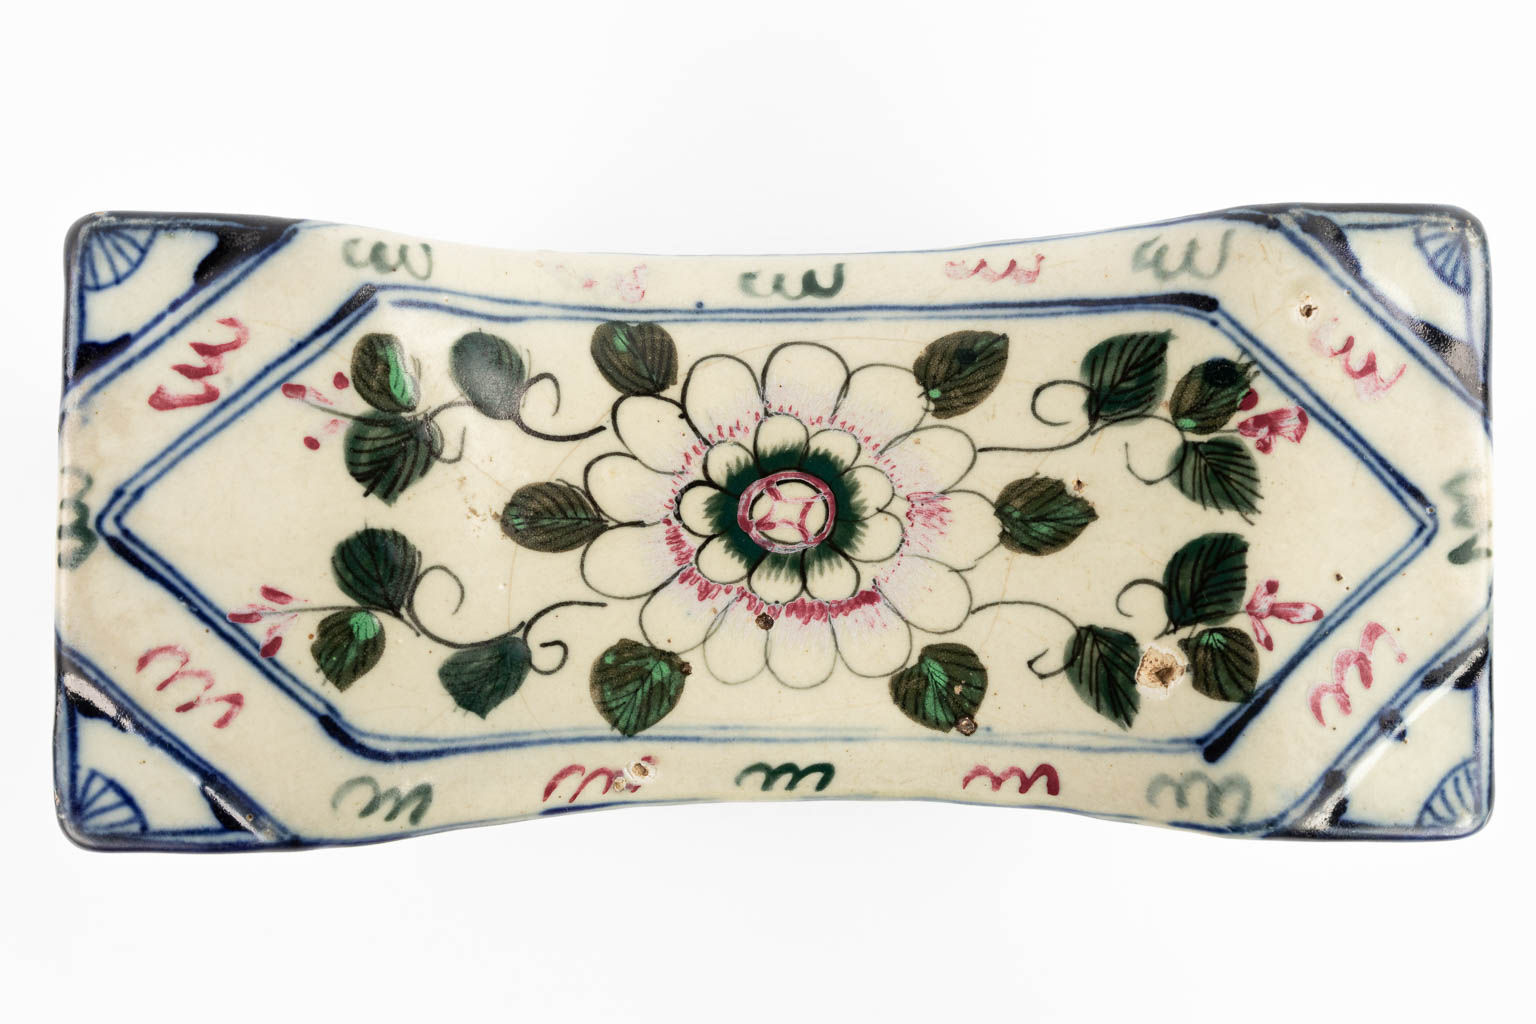 A Chinese pillow, polychrome porcelain, 18th/19th C. (D:11 x W:24 x H:12 cm)